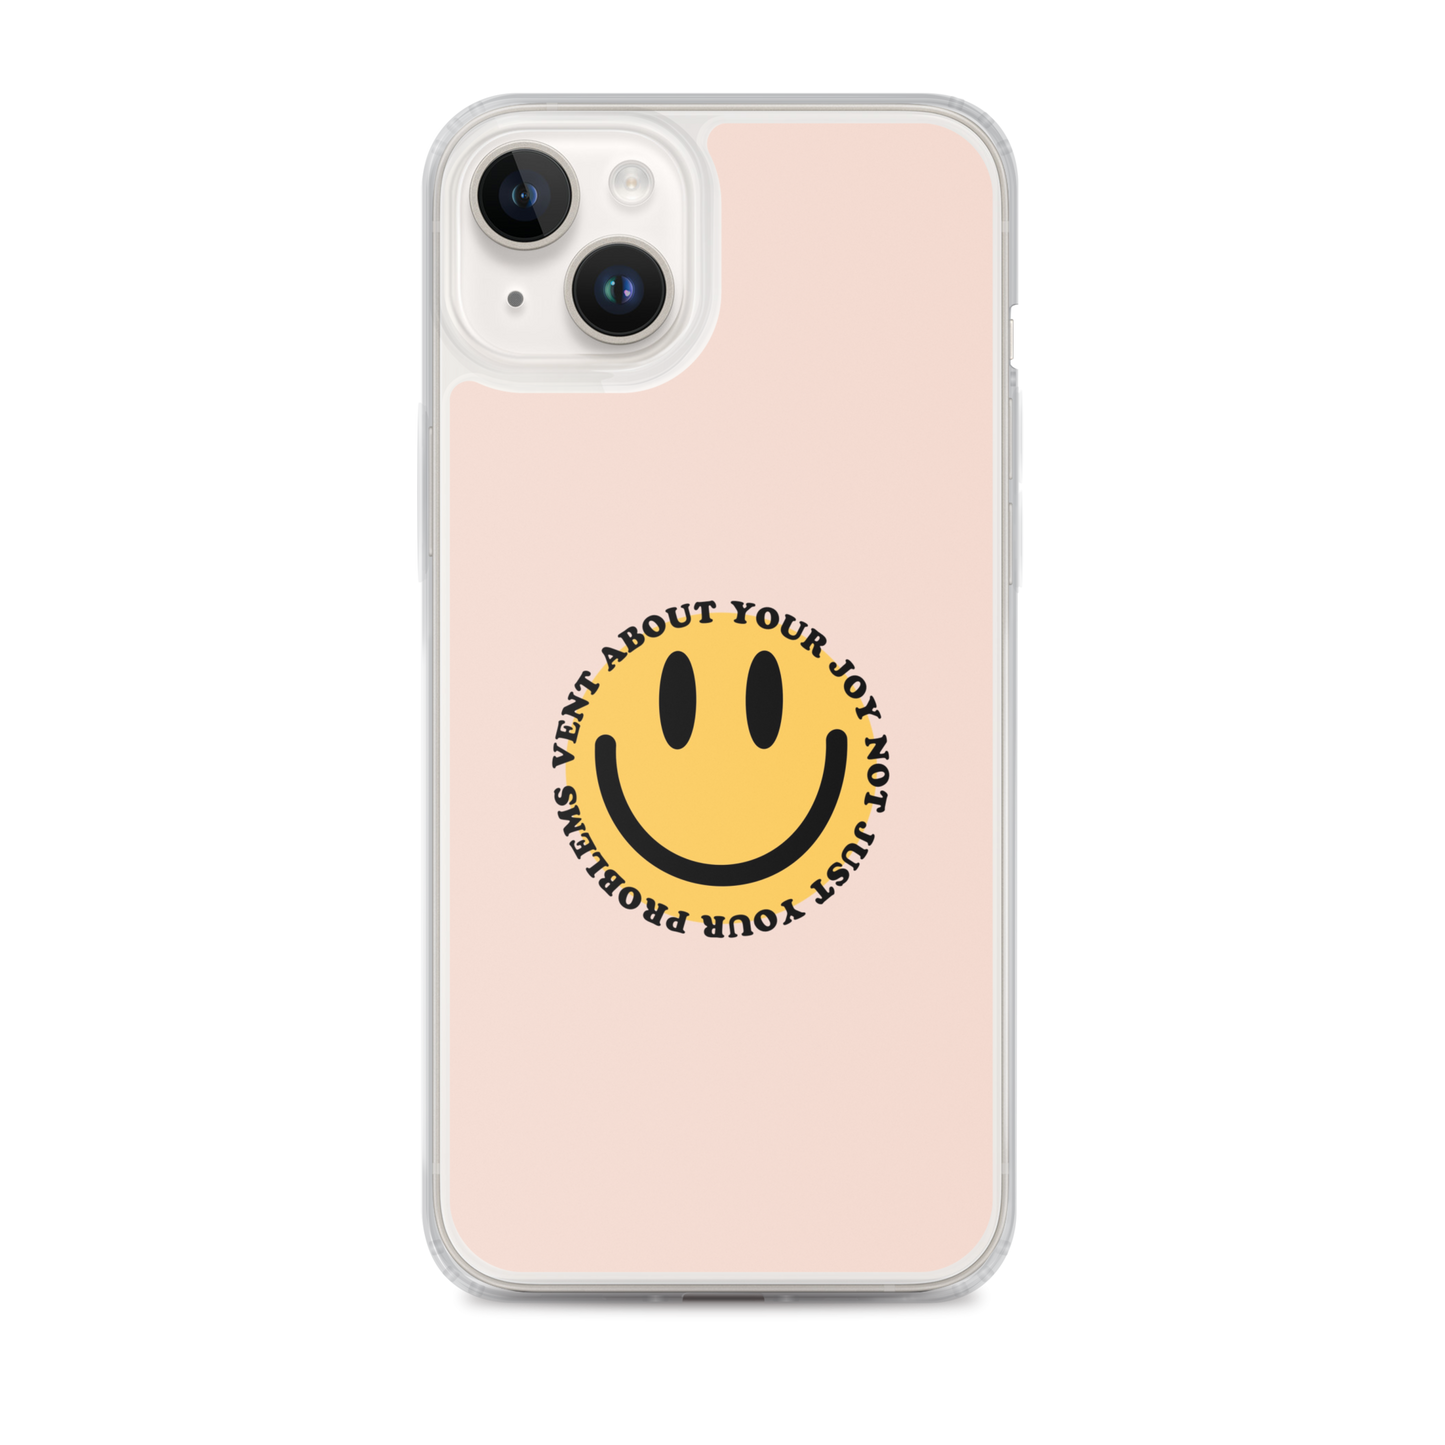 Vent About Your Joy iPhone Case